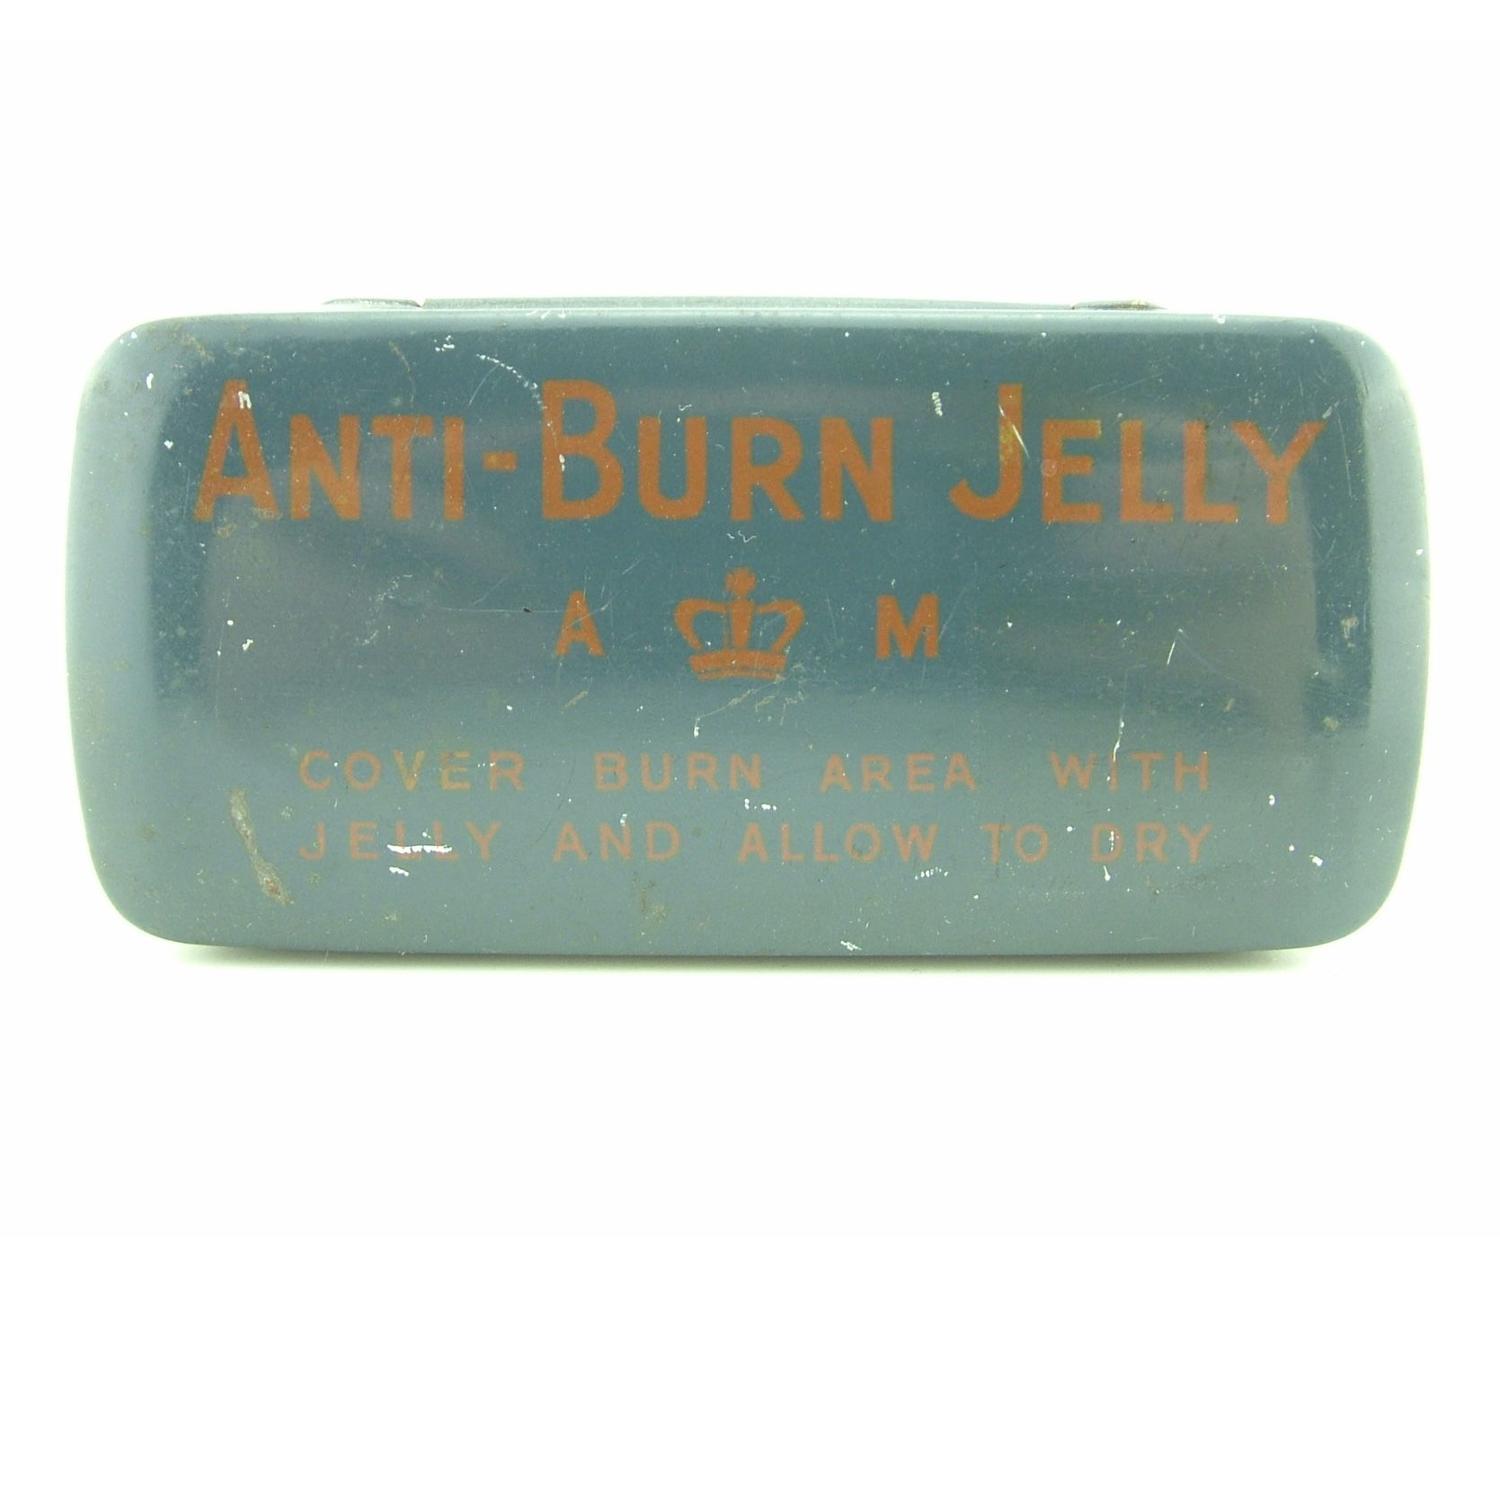 Air Ministry anti-burn jelly tin